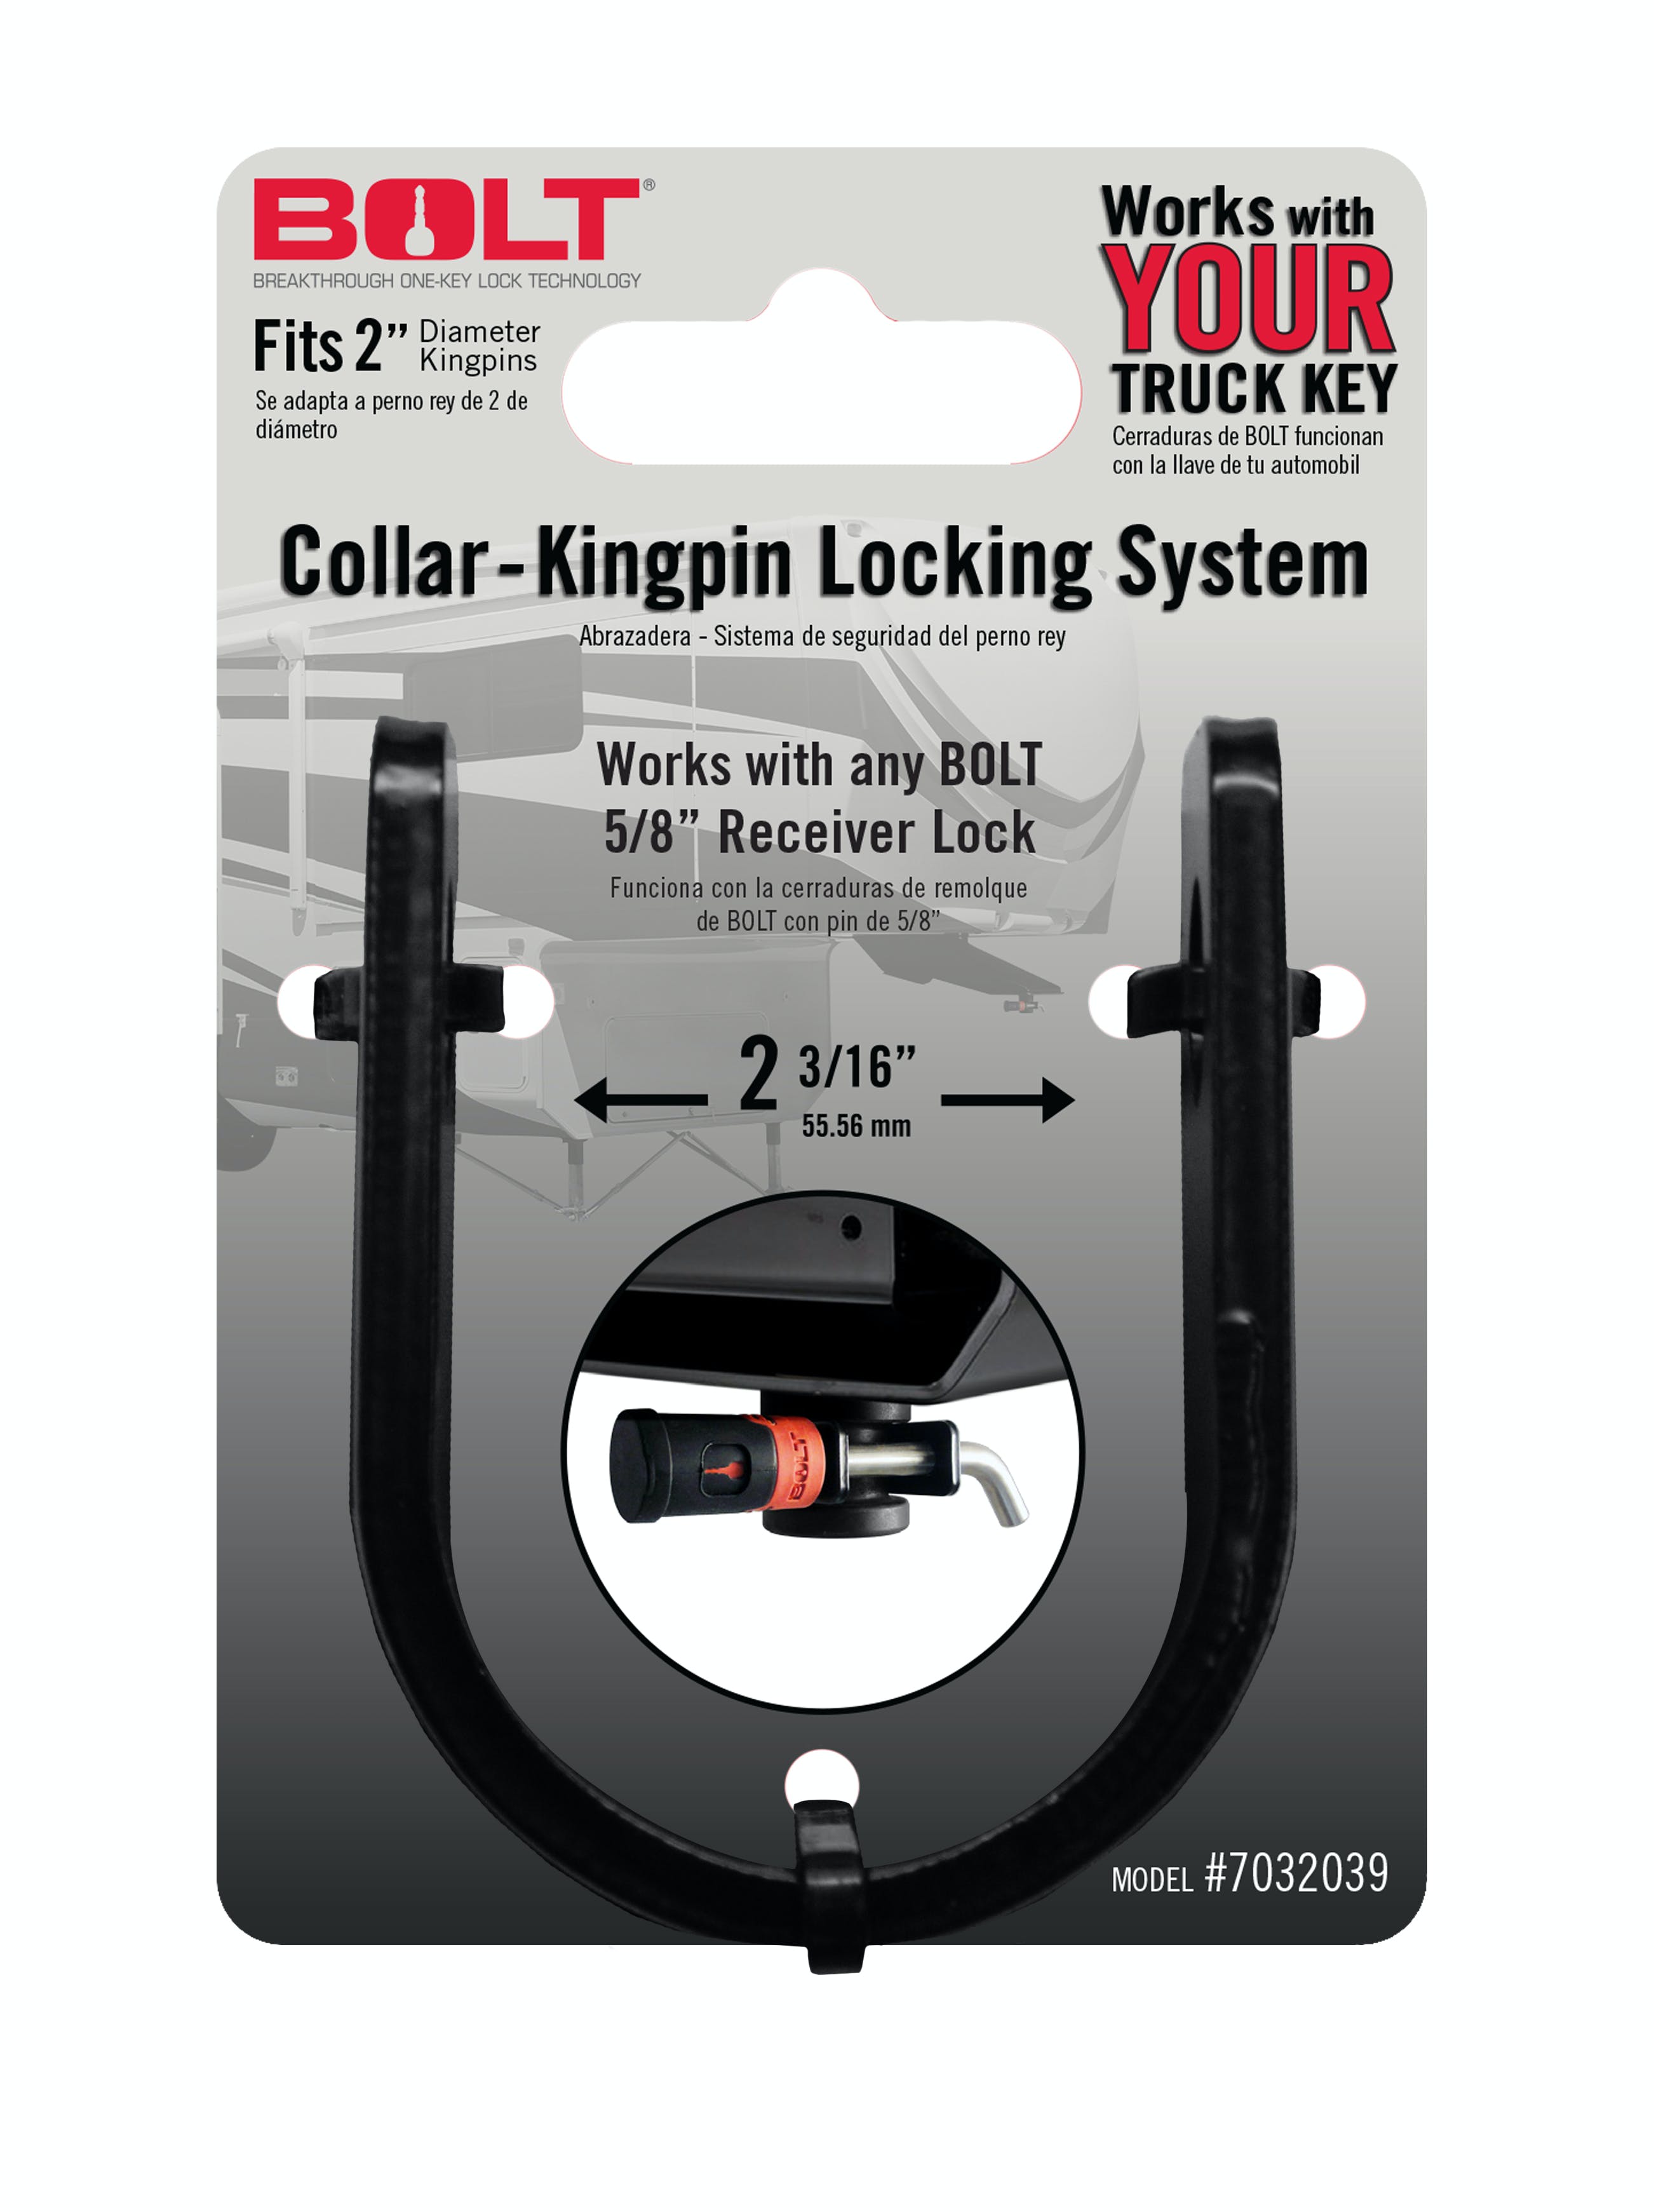 BOLT 7032039 Collar - King Pin Locking System